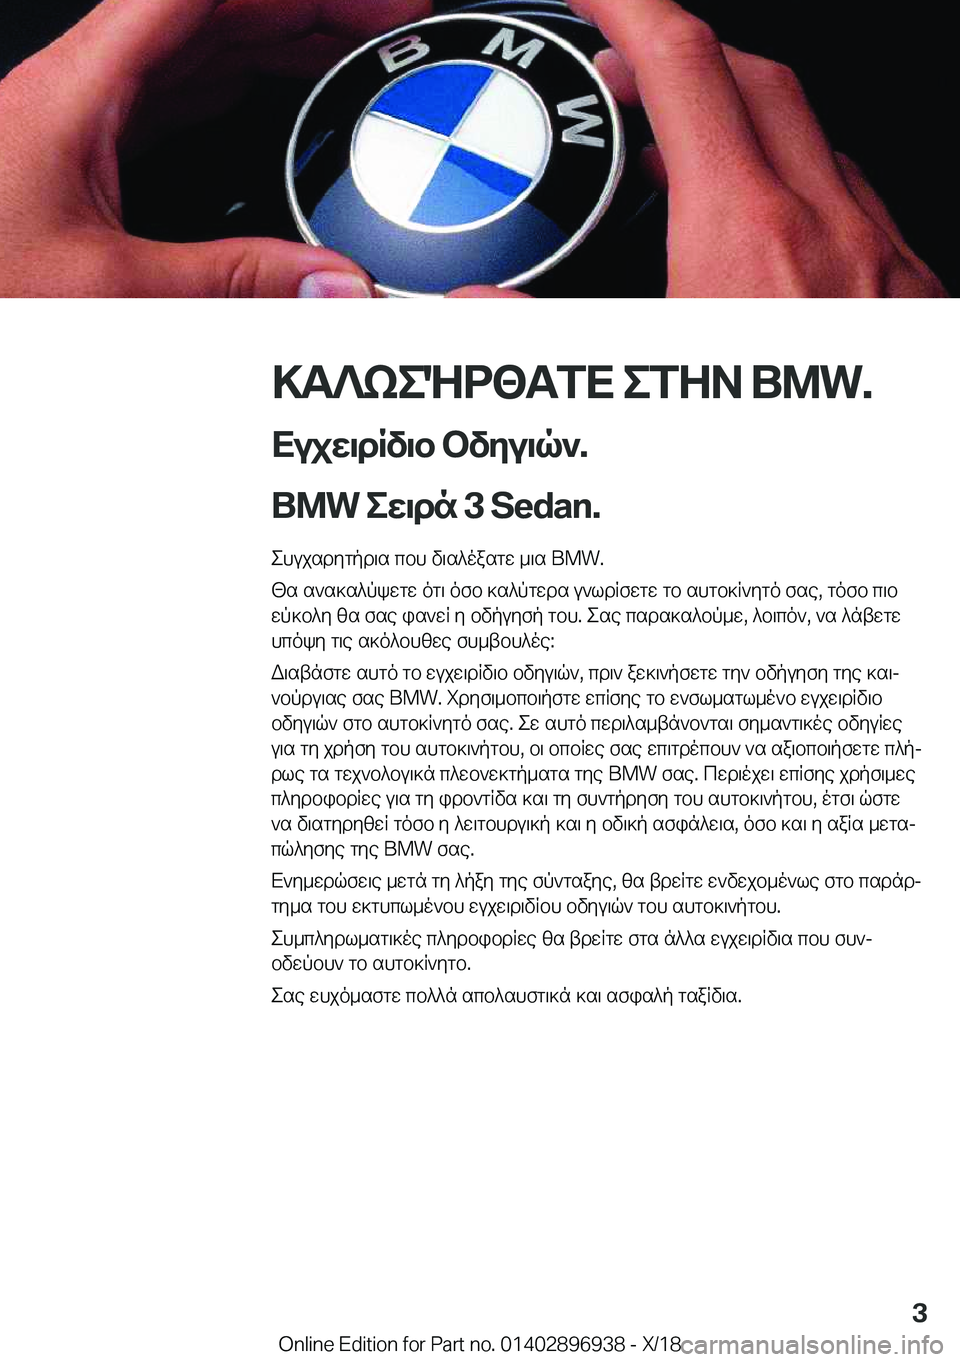 BMW 3 SERIES 2019  ΟΔΗΓΌΣ ΧΡΉΣΗΣ (in Greek) >T?keNd<TfX�efZA��B�M�W�.
Xujw\dRv\b�bvyu\q`�.
�B�M�W�ew\dn��3��S�e�d�a�n�. ehujsdygpd\s�cbh�v\s^oasgw�_\s��B�M�W�.[s�s`